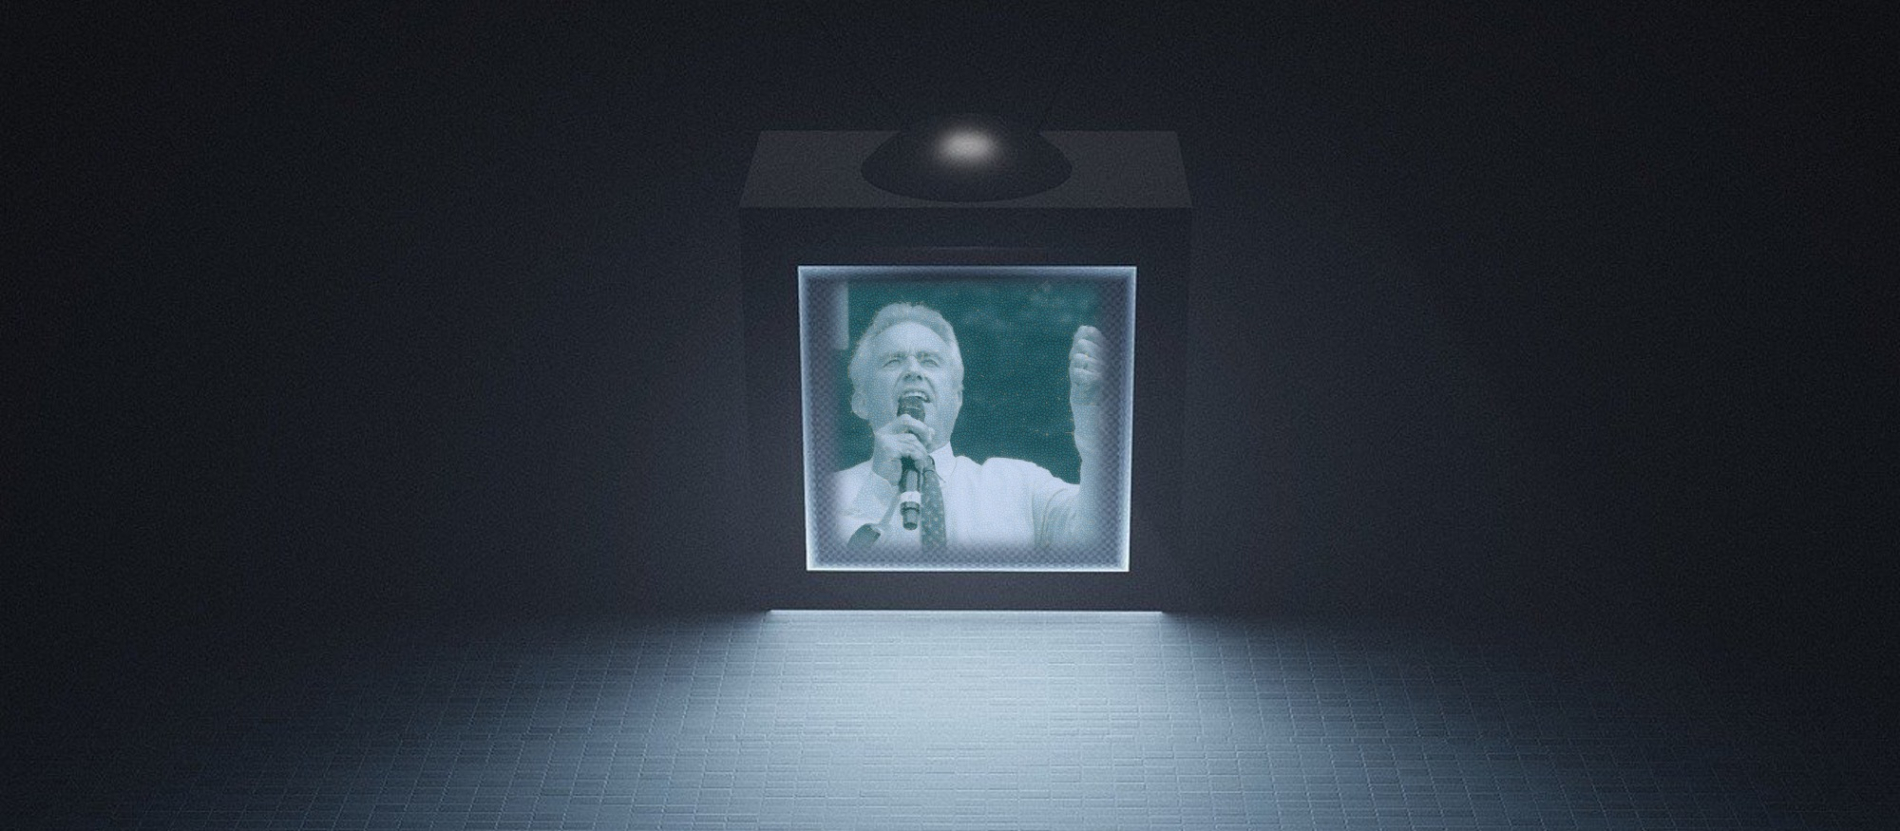 Robert Francis Kennedy Jr on a dimly lit CRT TV screen